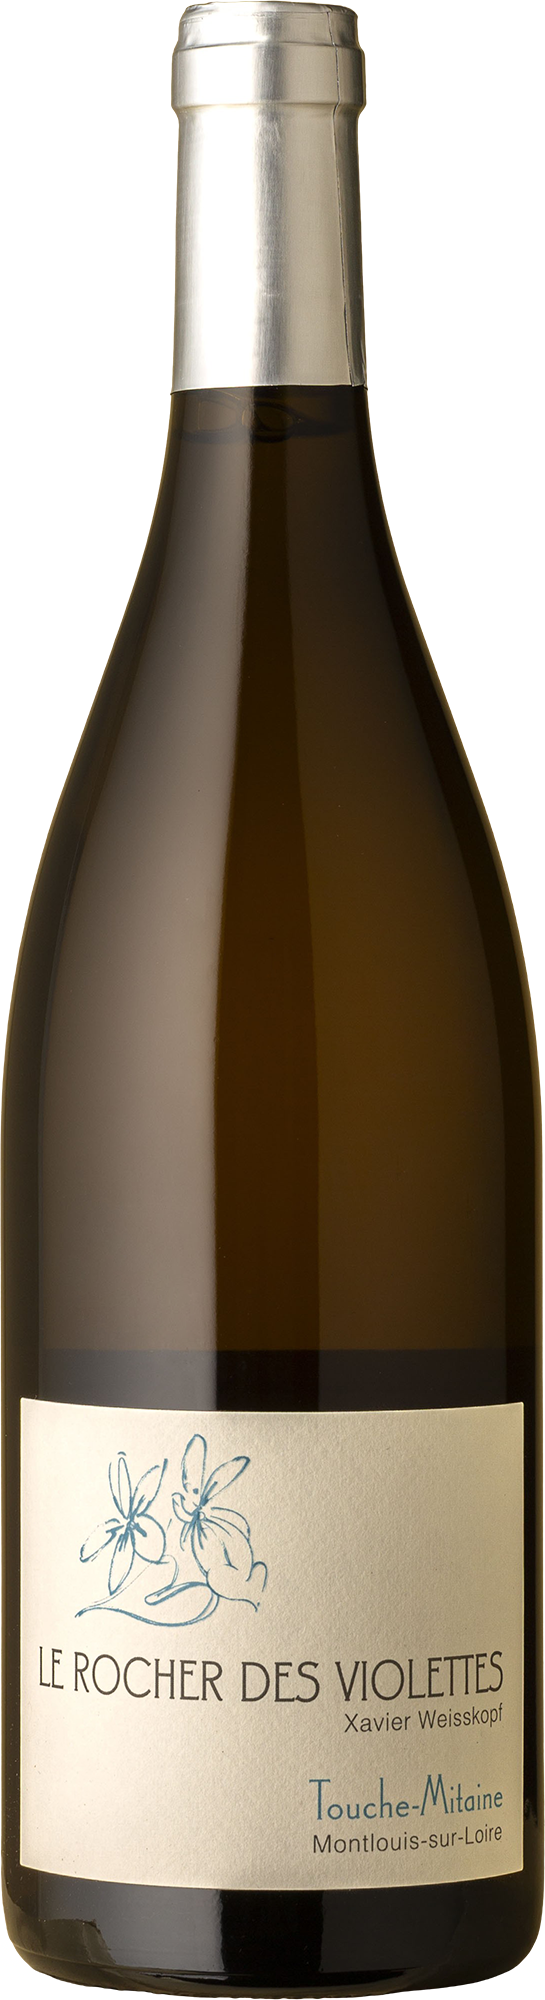 Le Rocher Des Violettes - Touche Mitaine Sec Chenin Blanc 2021 White Wine